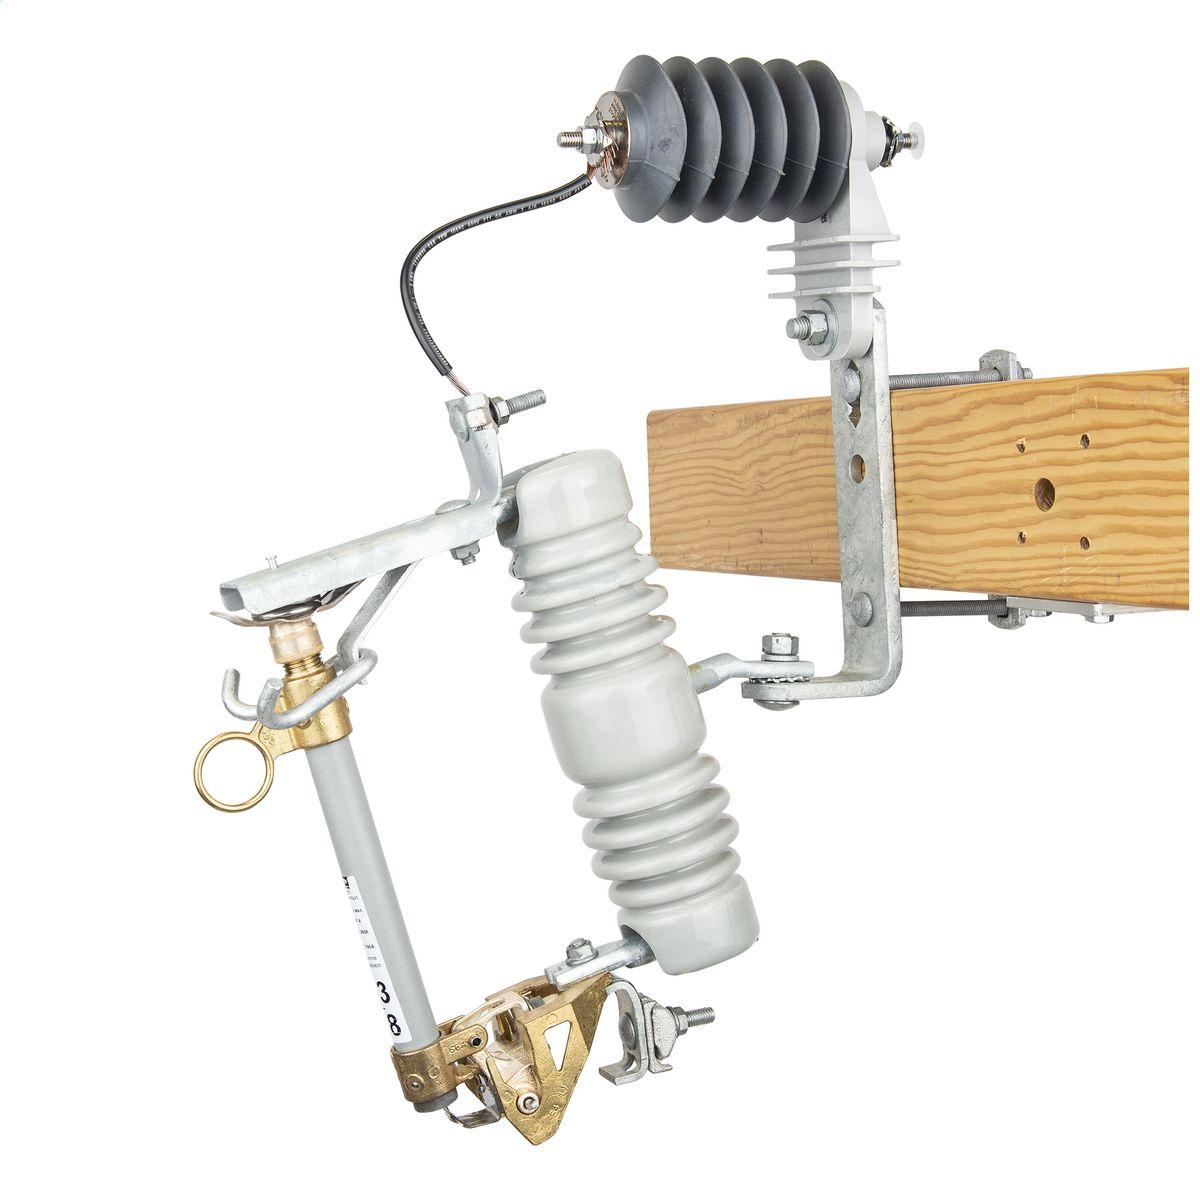 Hubbell C71DL143EB 15 kV, 110 kV BIL, Standard Type C Porcelain Cutout / Arrester Combination with a 200A, 12kAIC fuseholder, small eyebolt connector and a NEMA "B" crossarm bracket. 